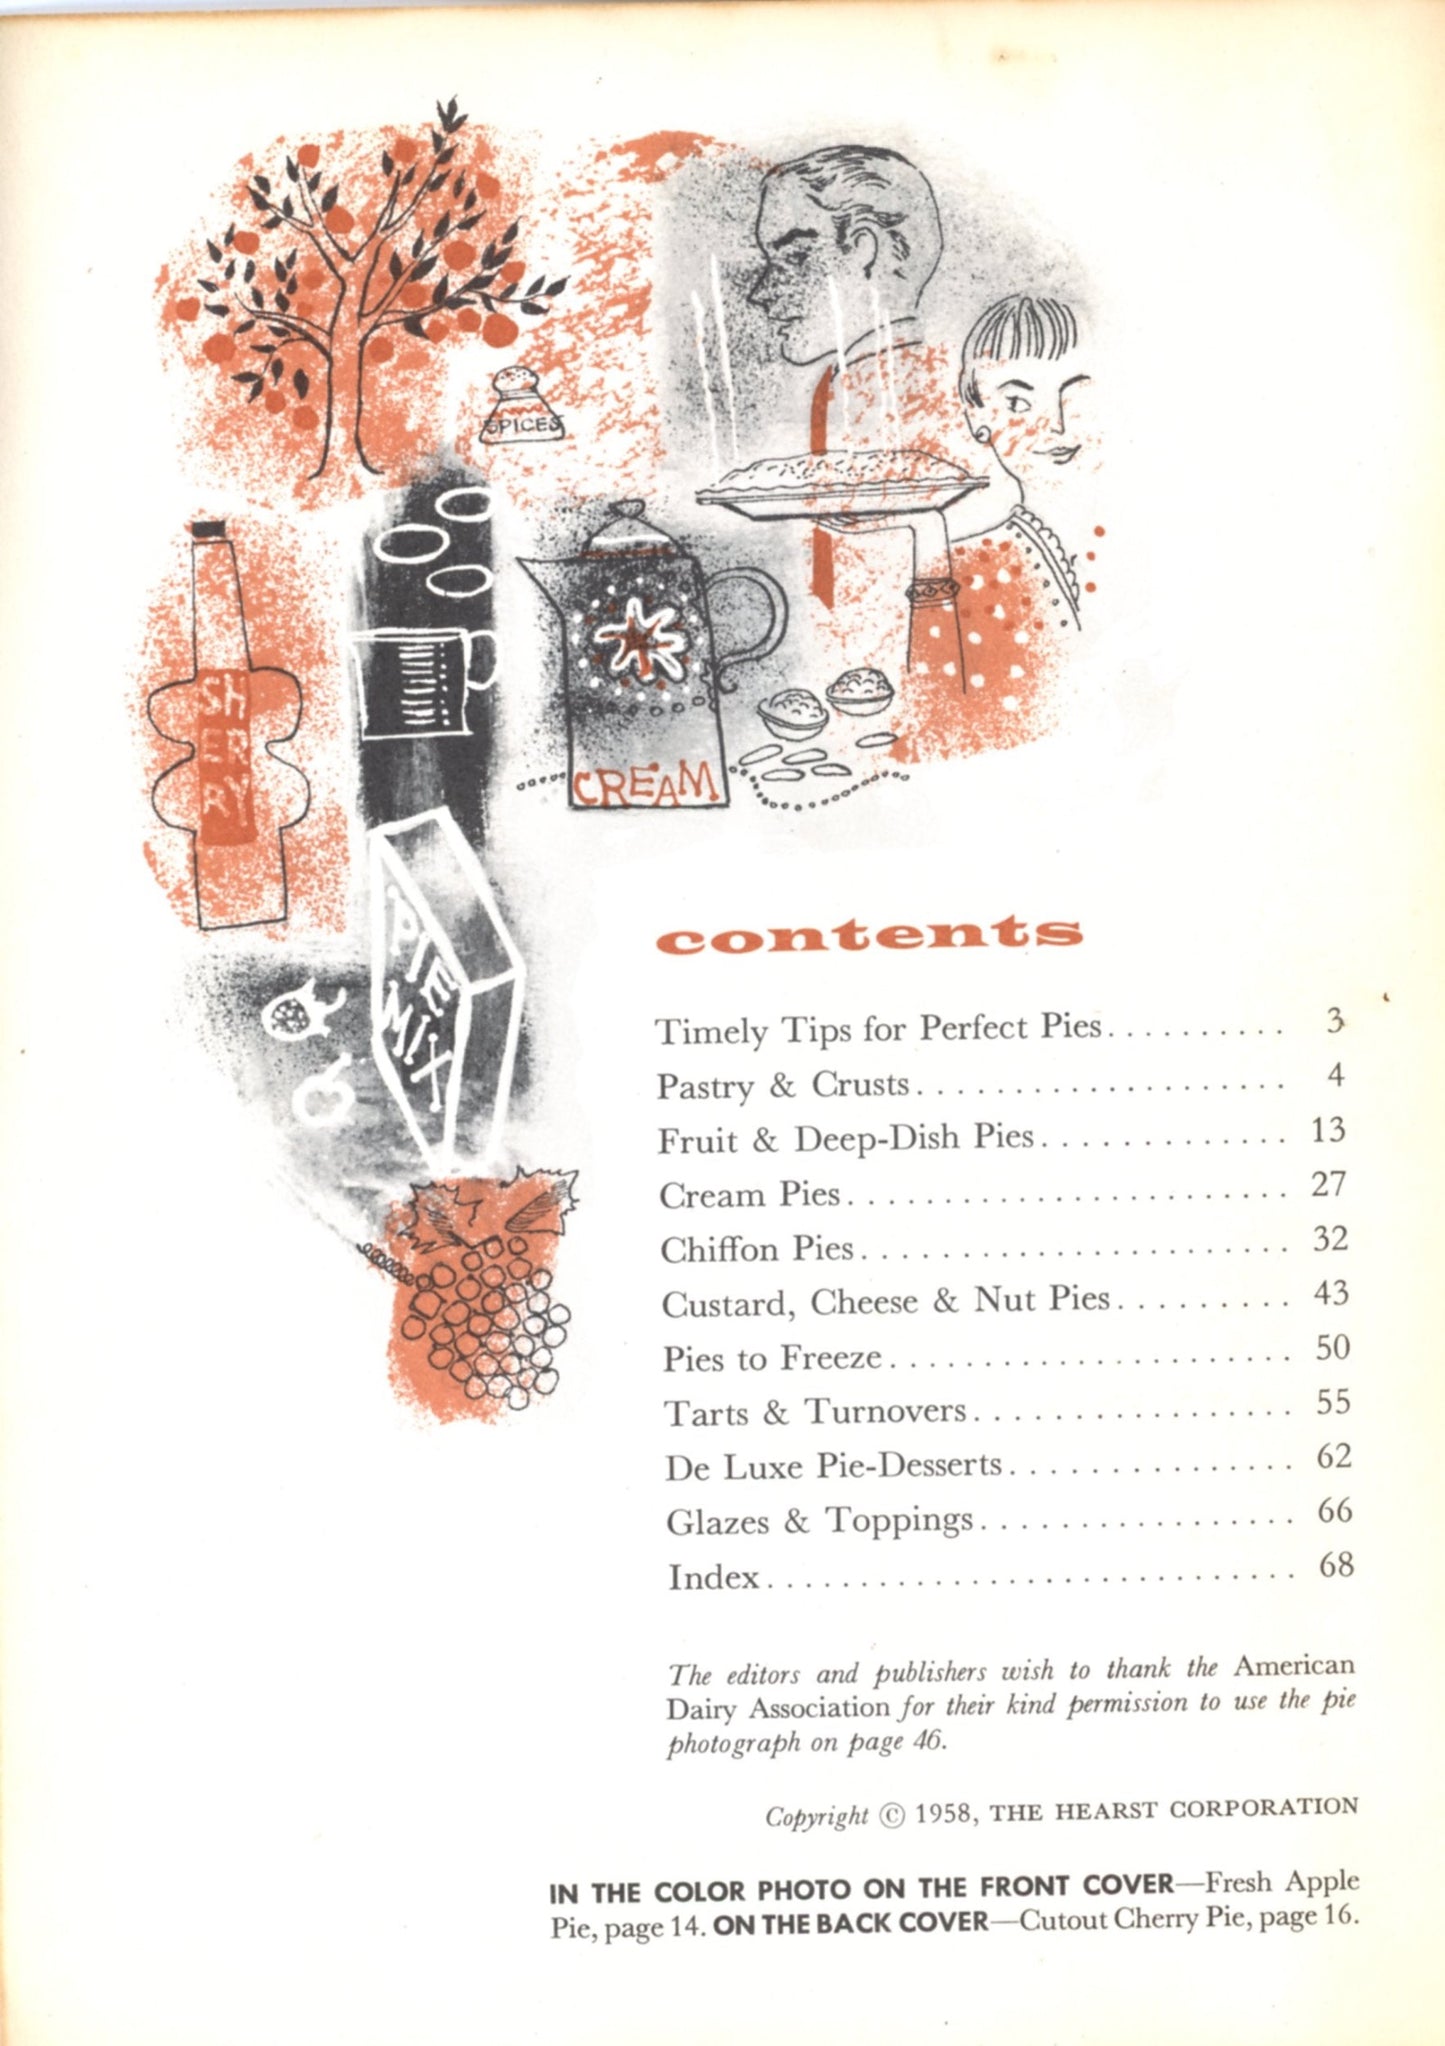 Good Housekeeping's PARTY PIE BOOK Vintage Recipe Booklet ©1958